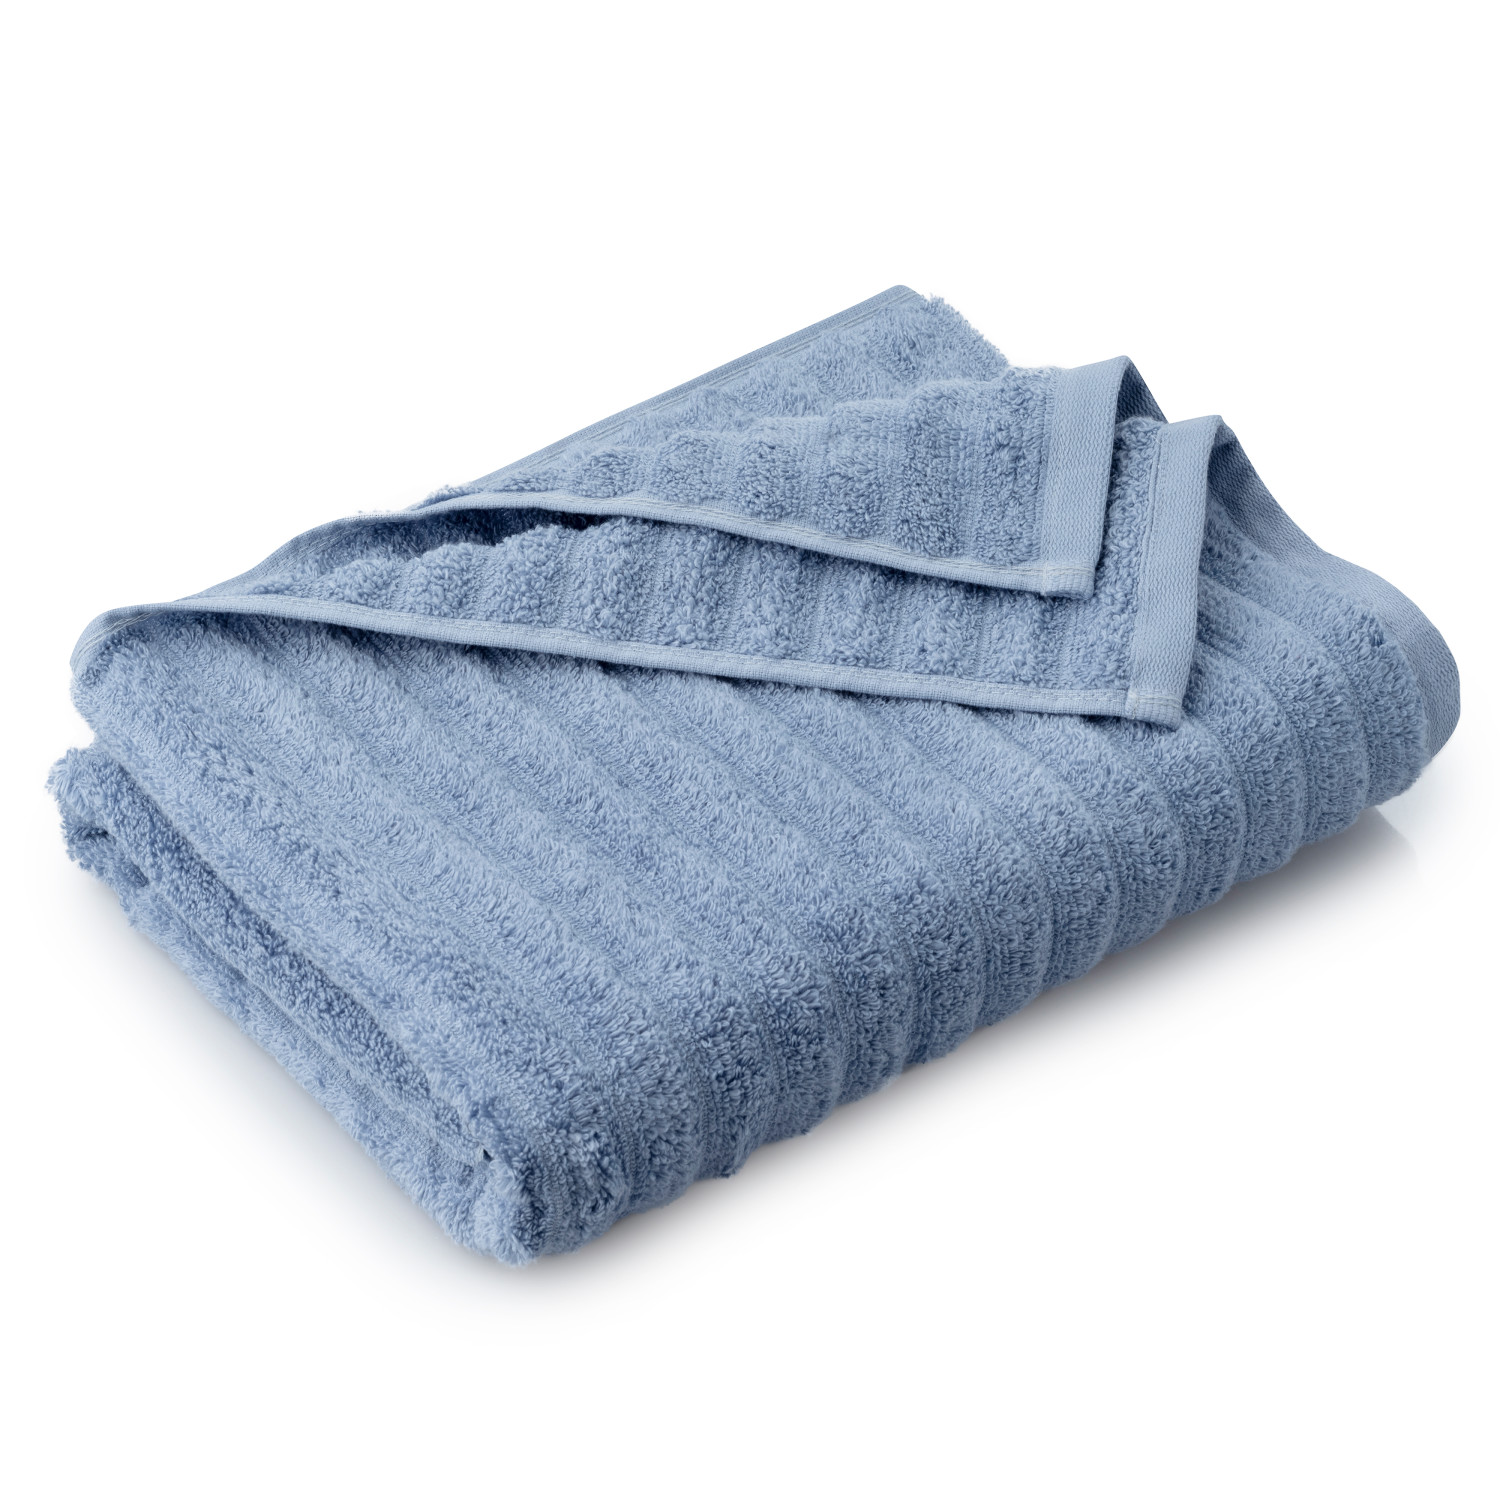 Mainstays Performance 6-Piece Towel Set, Textured Blue Linen - image 2 of 6